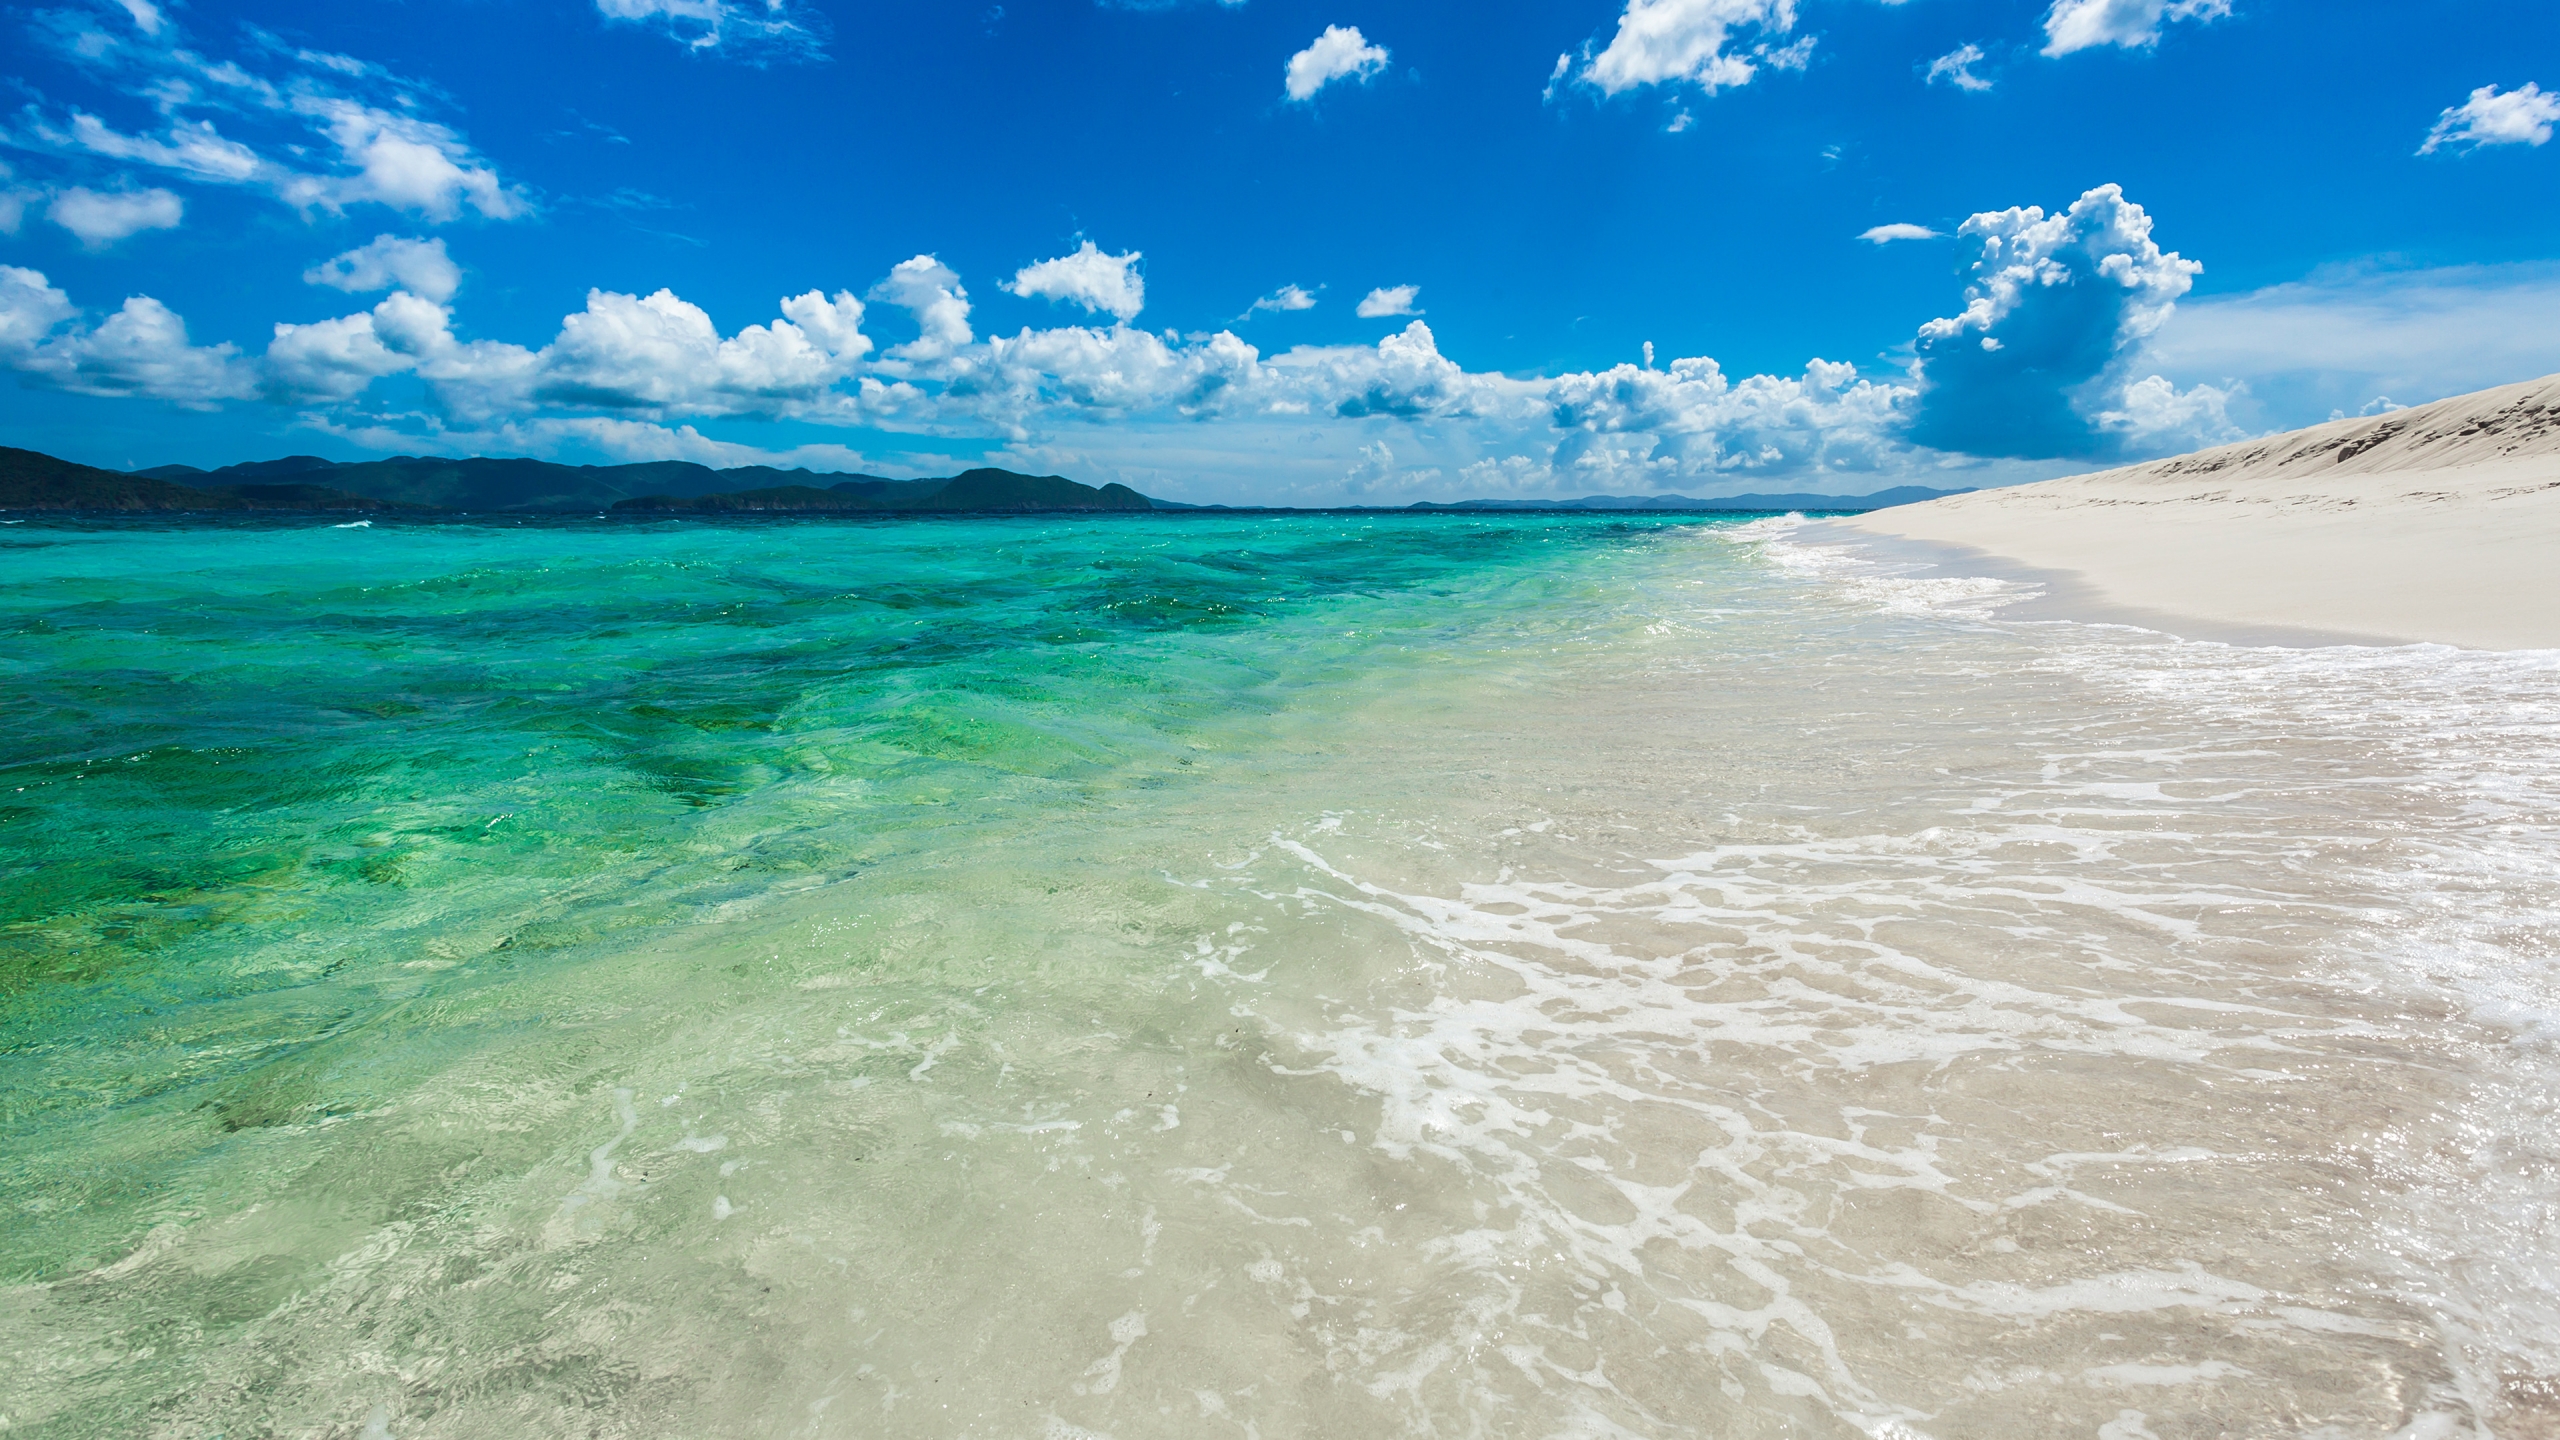 Sandy Cay Island for 2560x1440 HDTV resolution